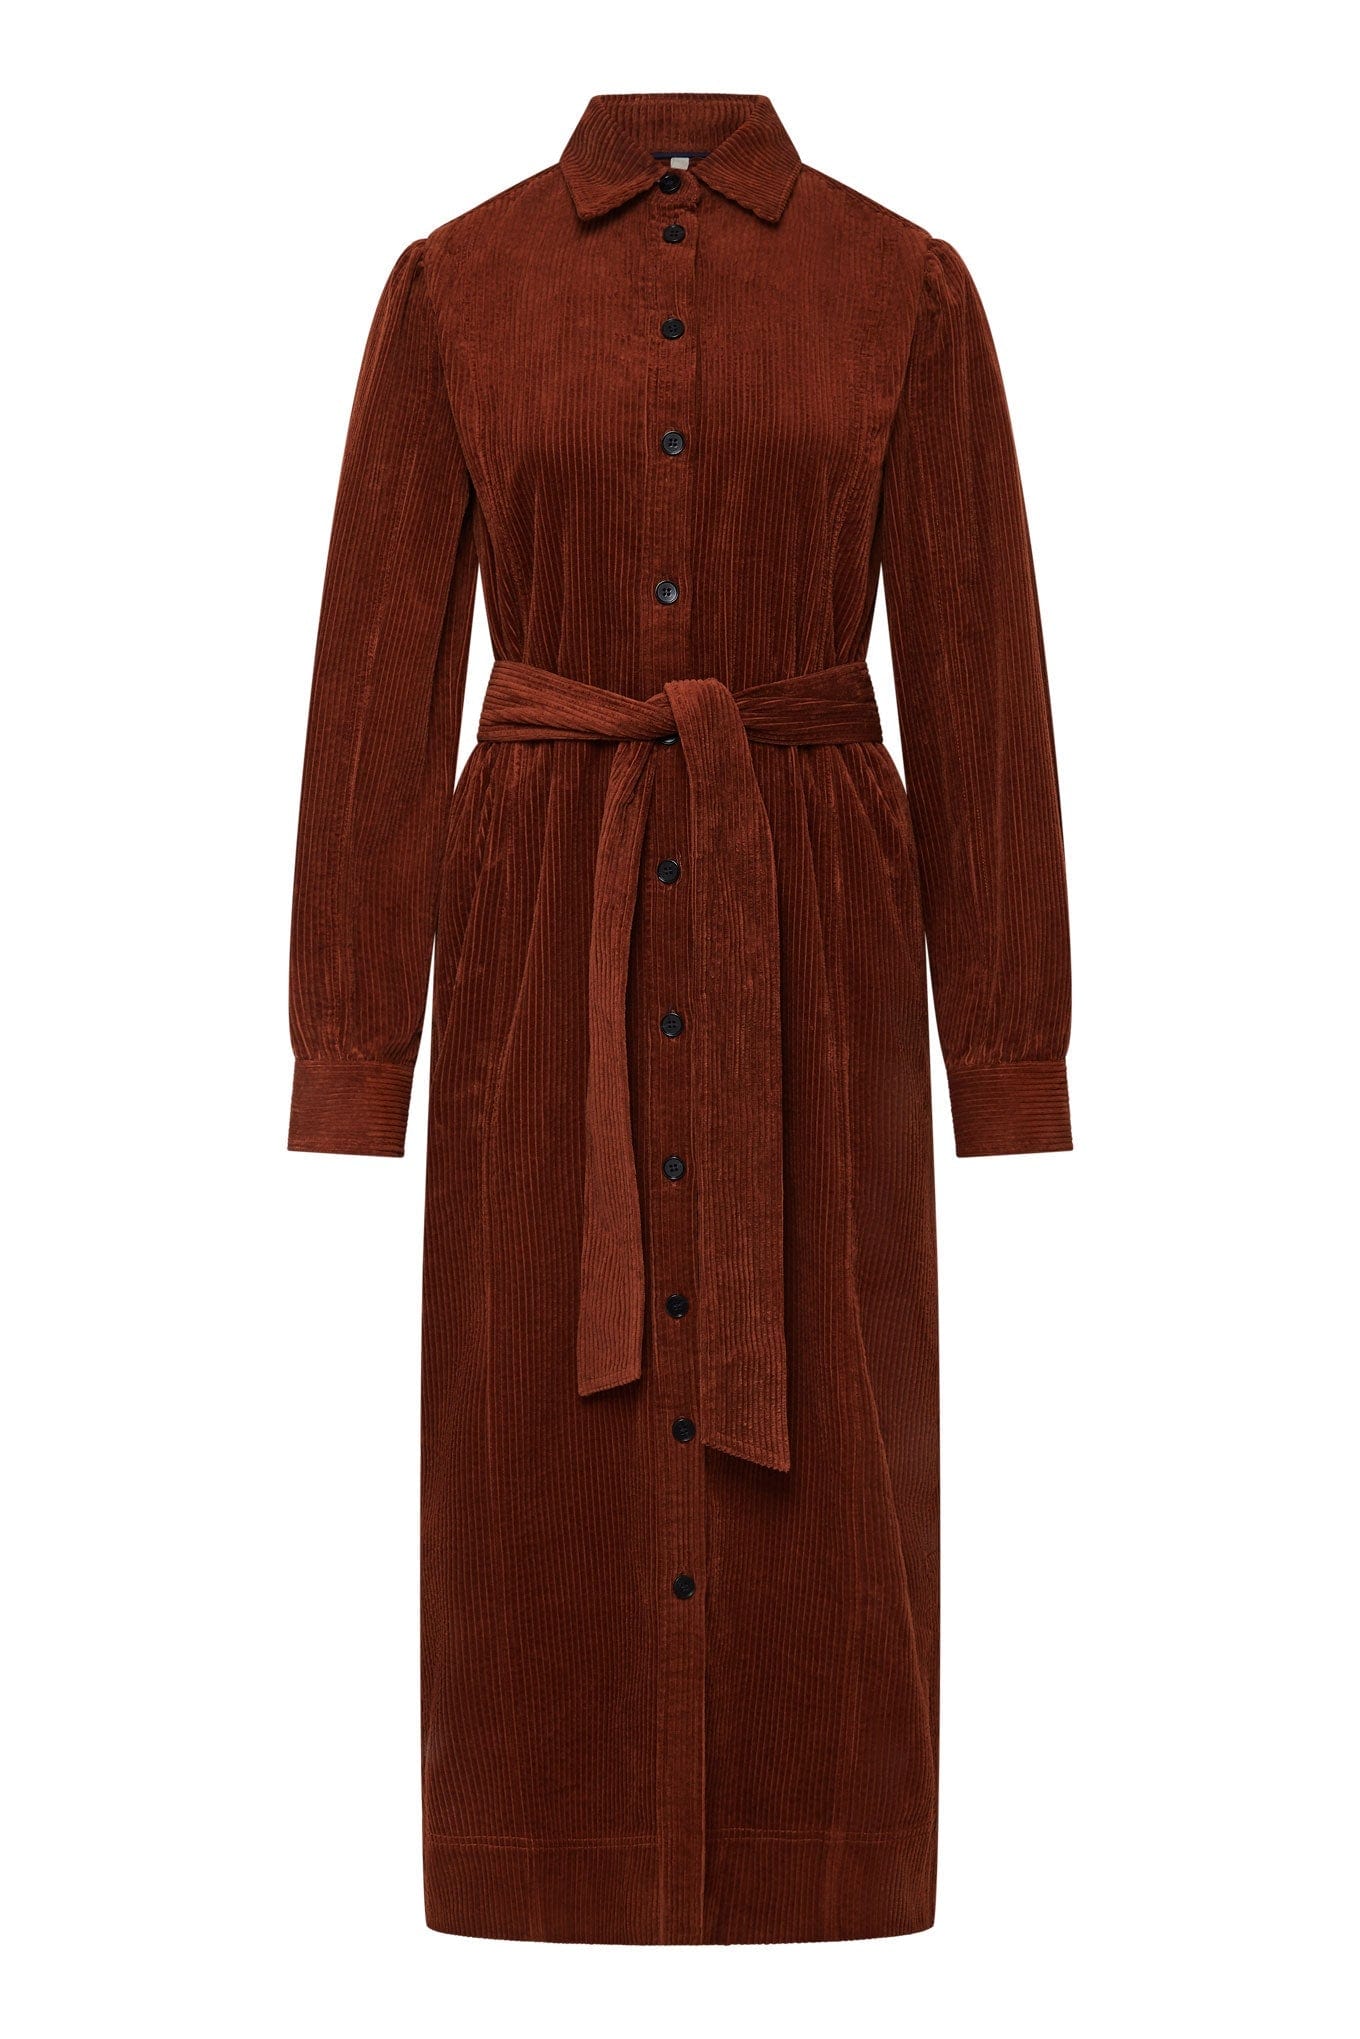 KOMODO REINA - Organic Cotton Cord Dress Chestnut